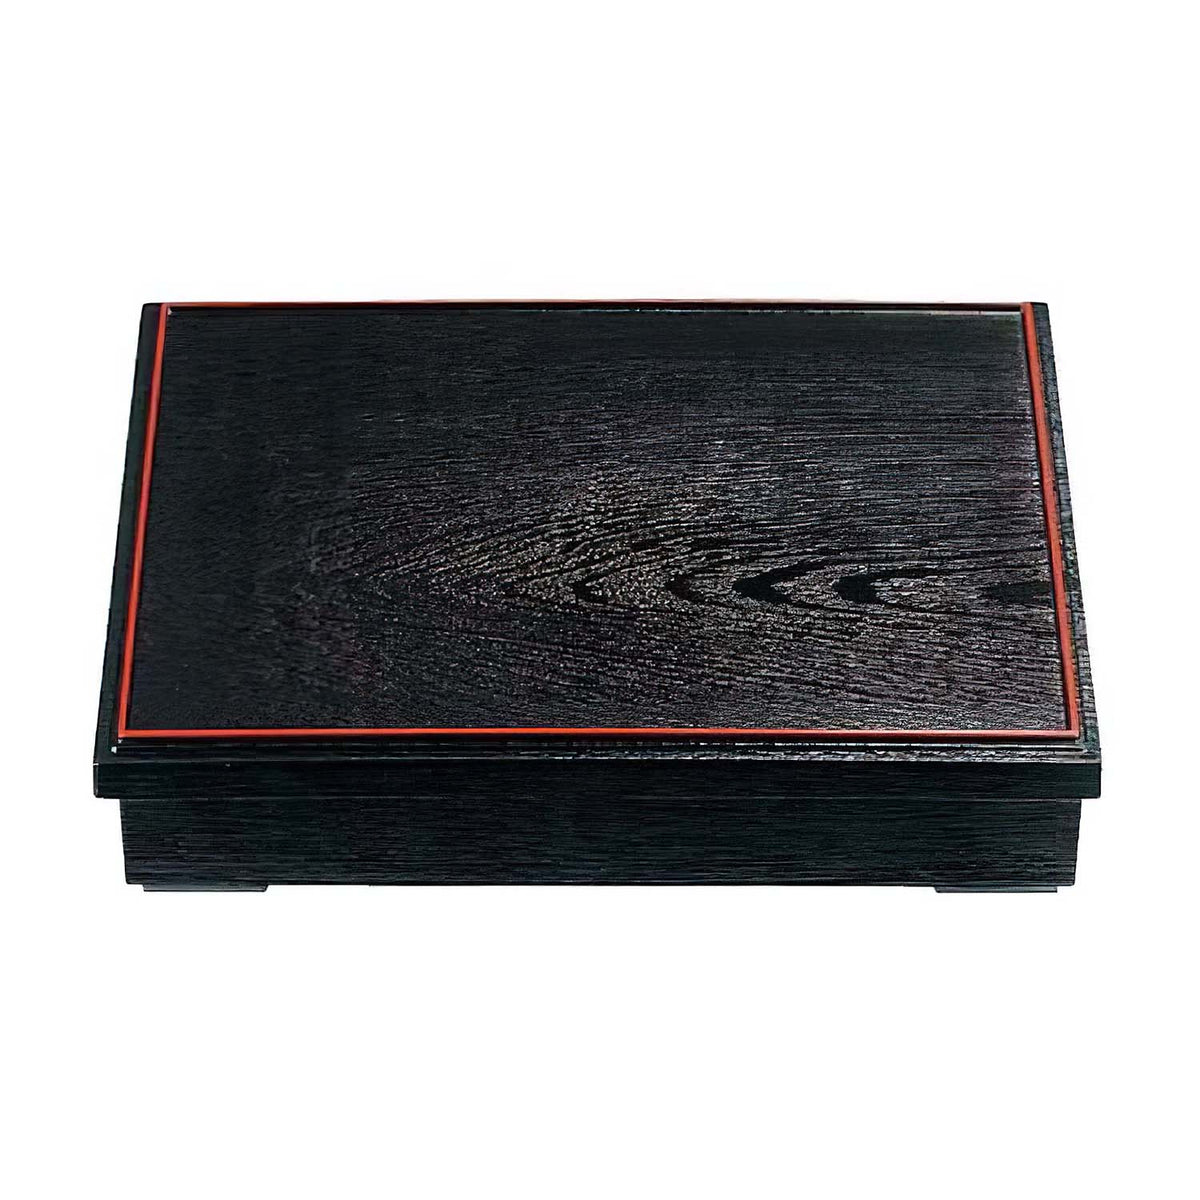 Fukui Craft ABS Resin 6-Divided Shokado Bento Box